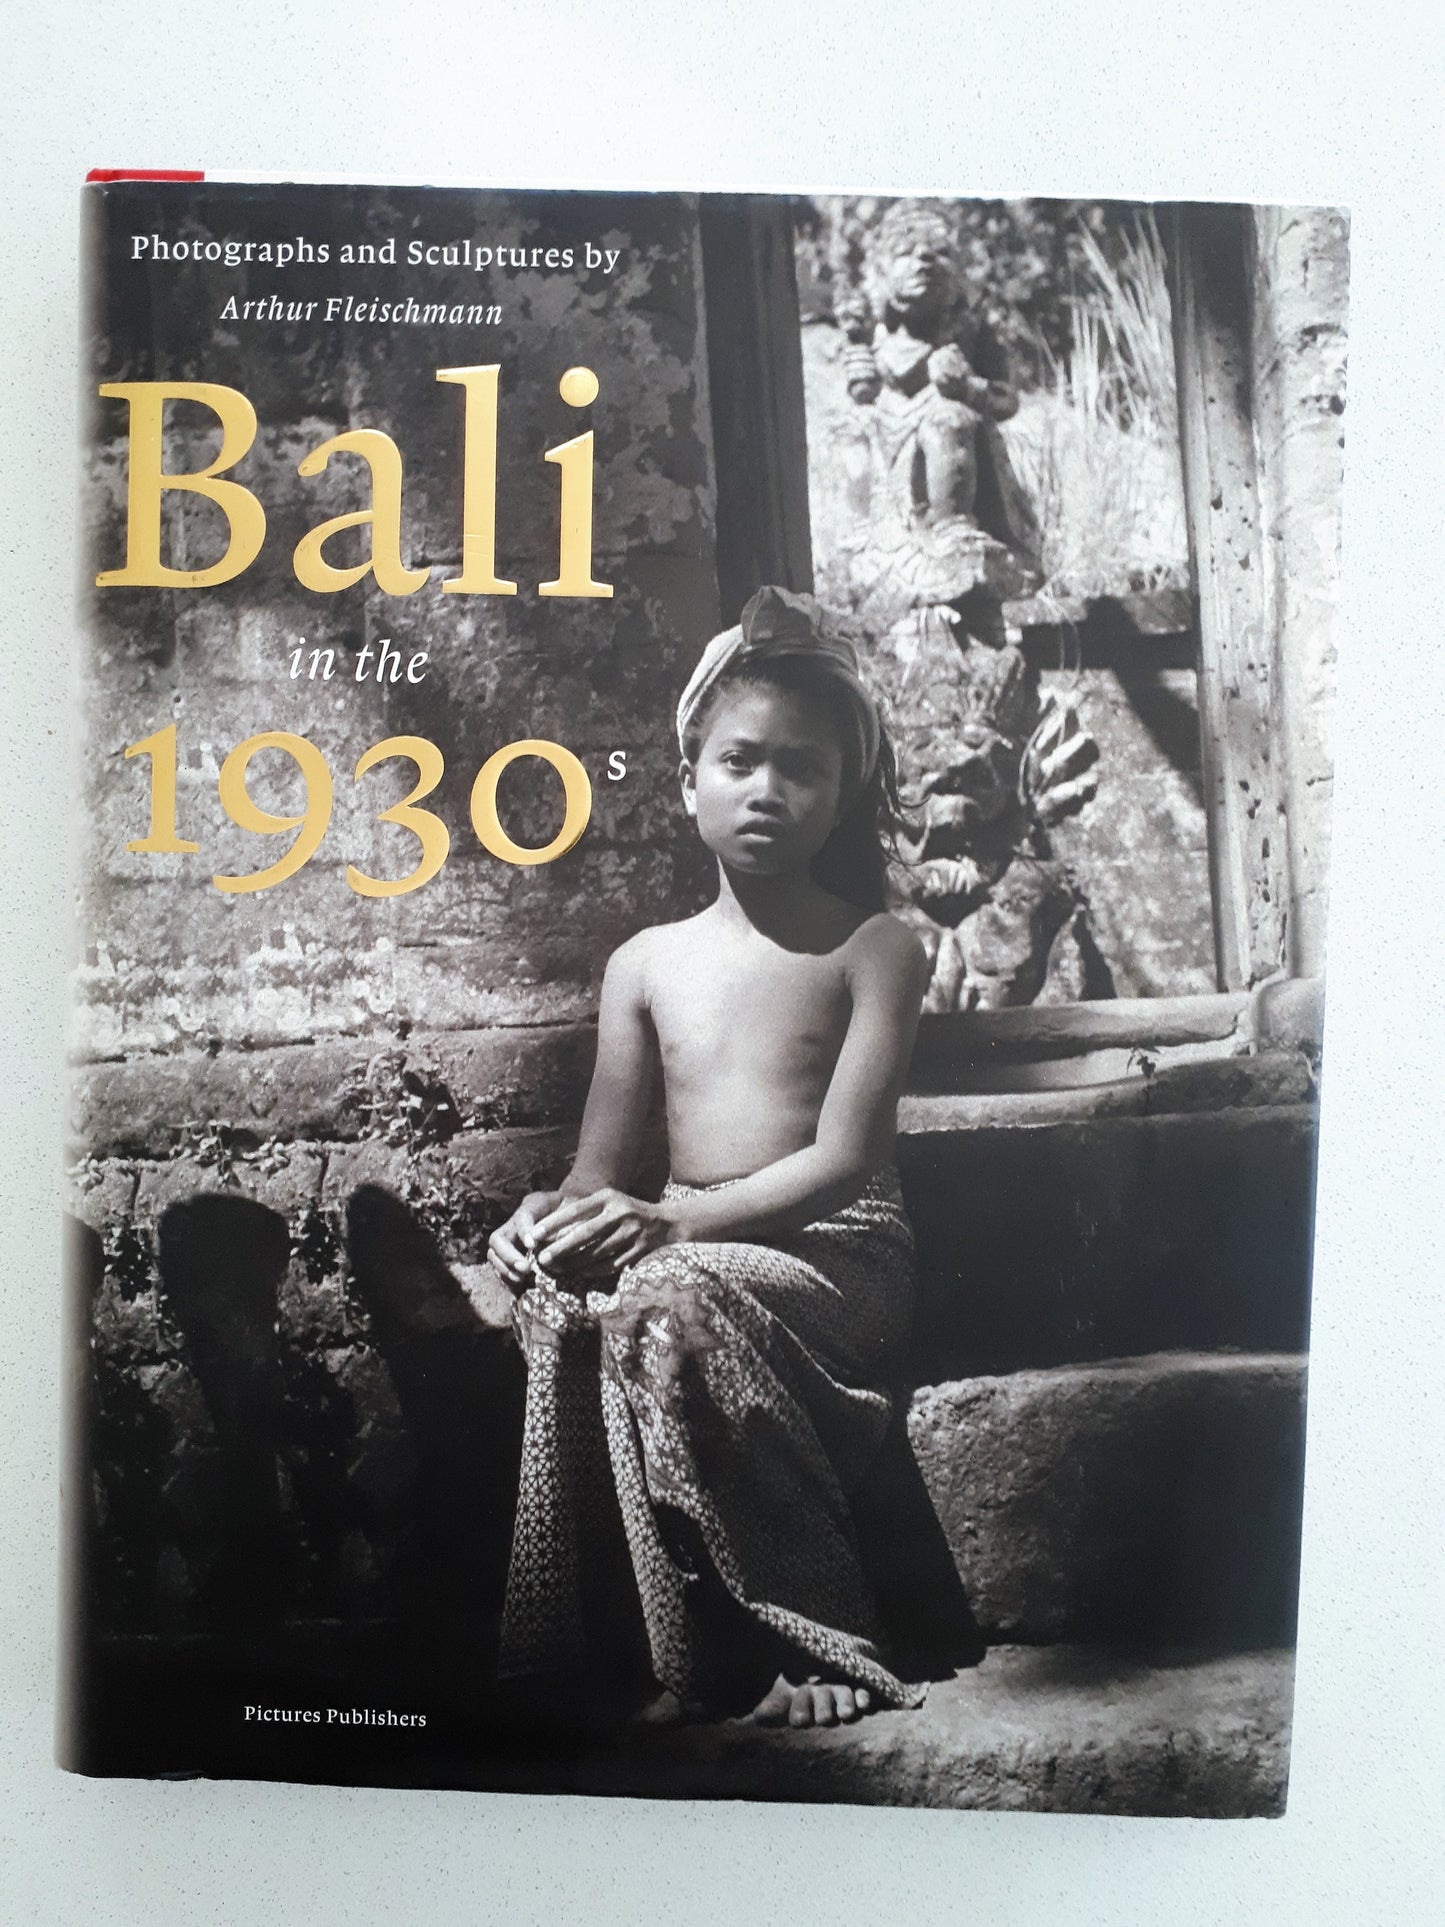 Bali in the 1930s -  Photographs and Sculptures by Arthur Fleischmann